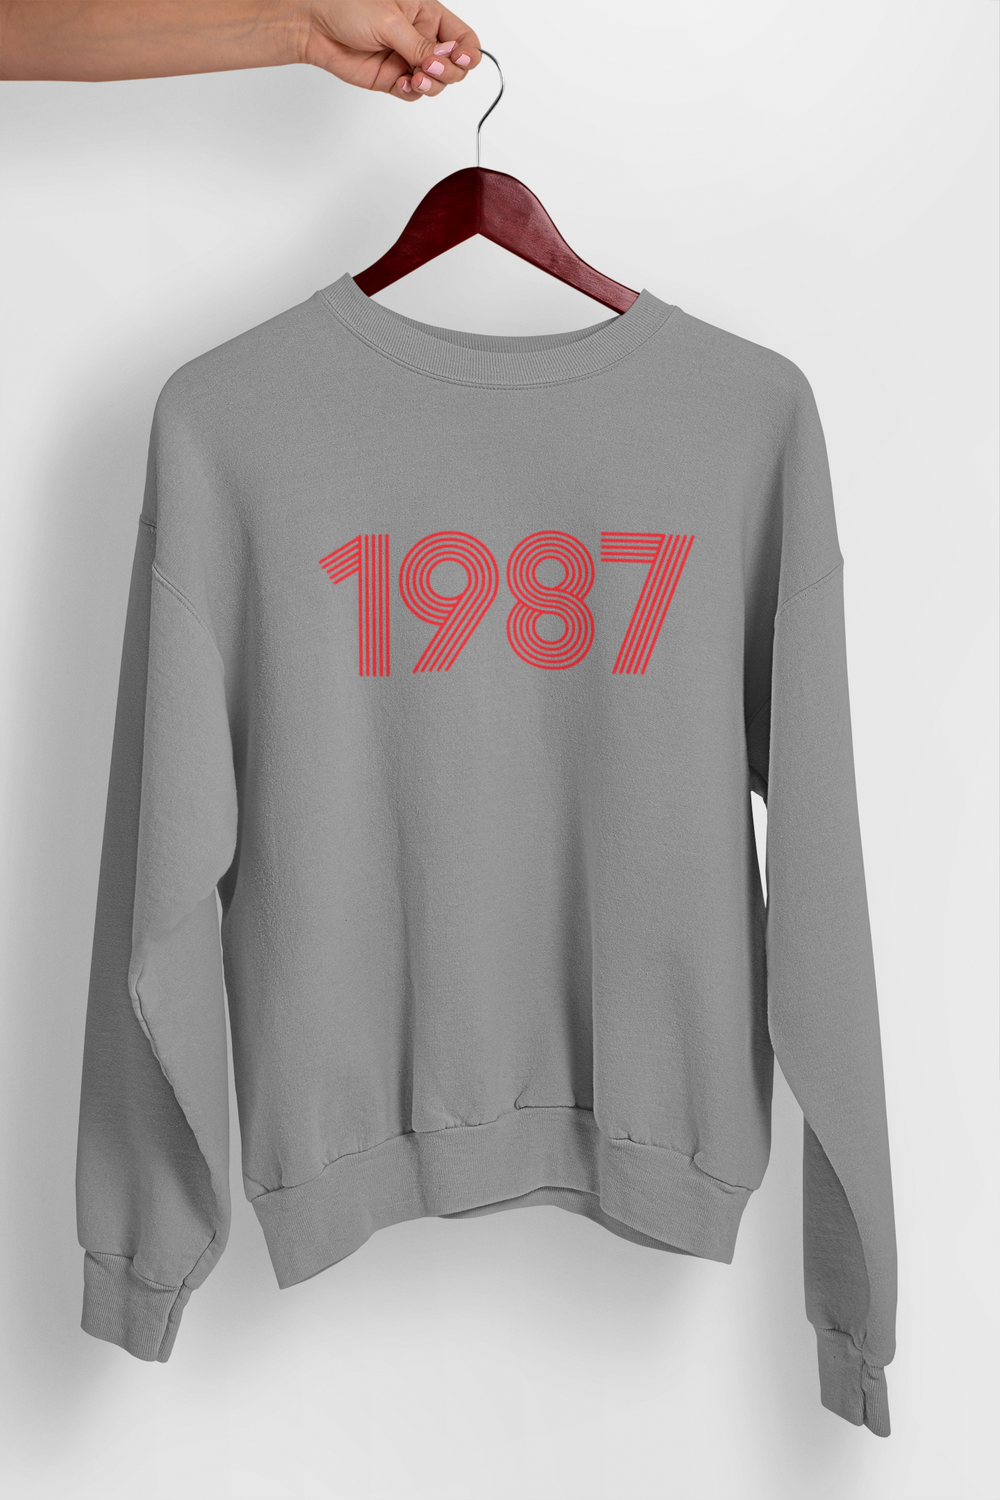 1987 Retro Red Unisex Sweater - TalkPeng